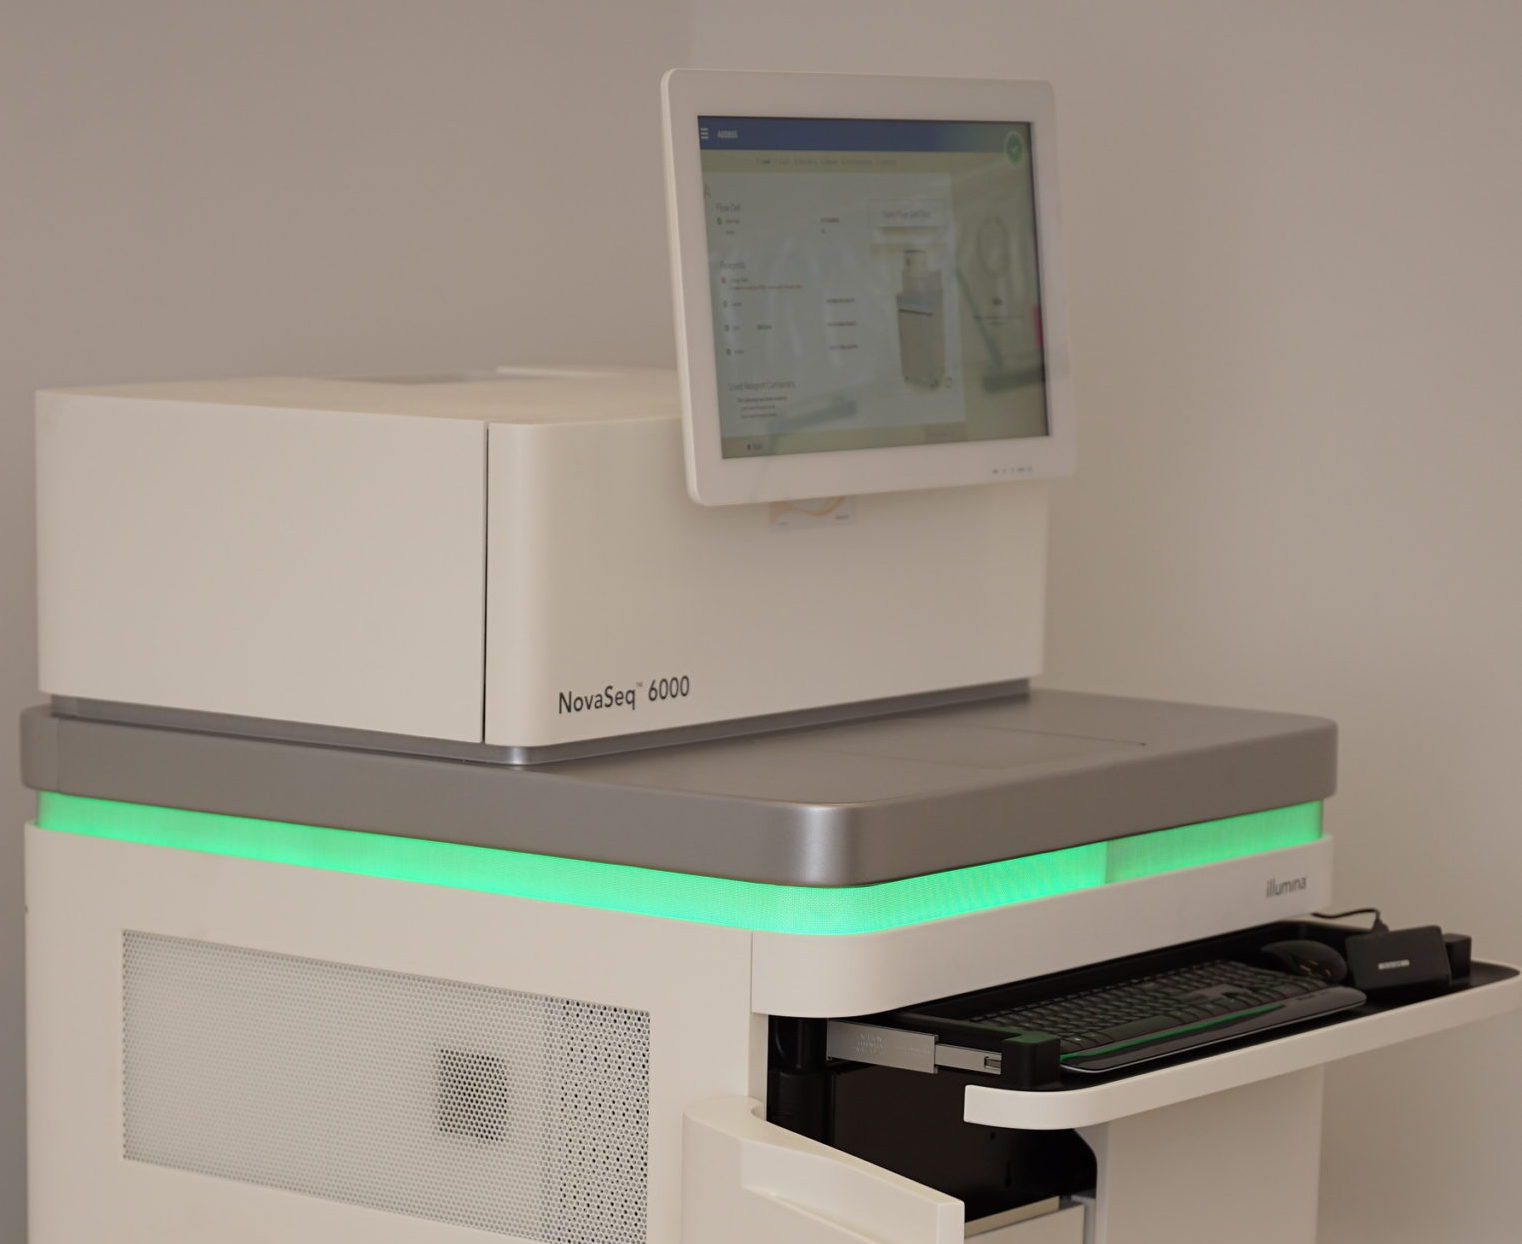 photo of the Illumuina NovaSeq 6000 sequencing system